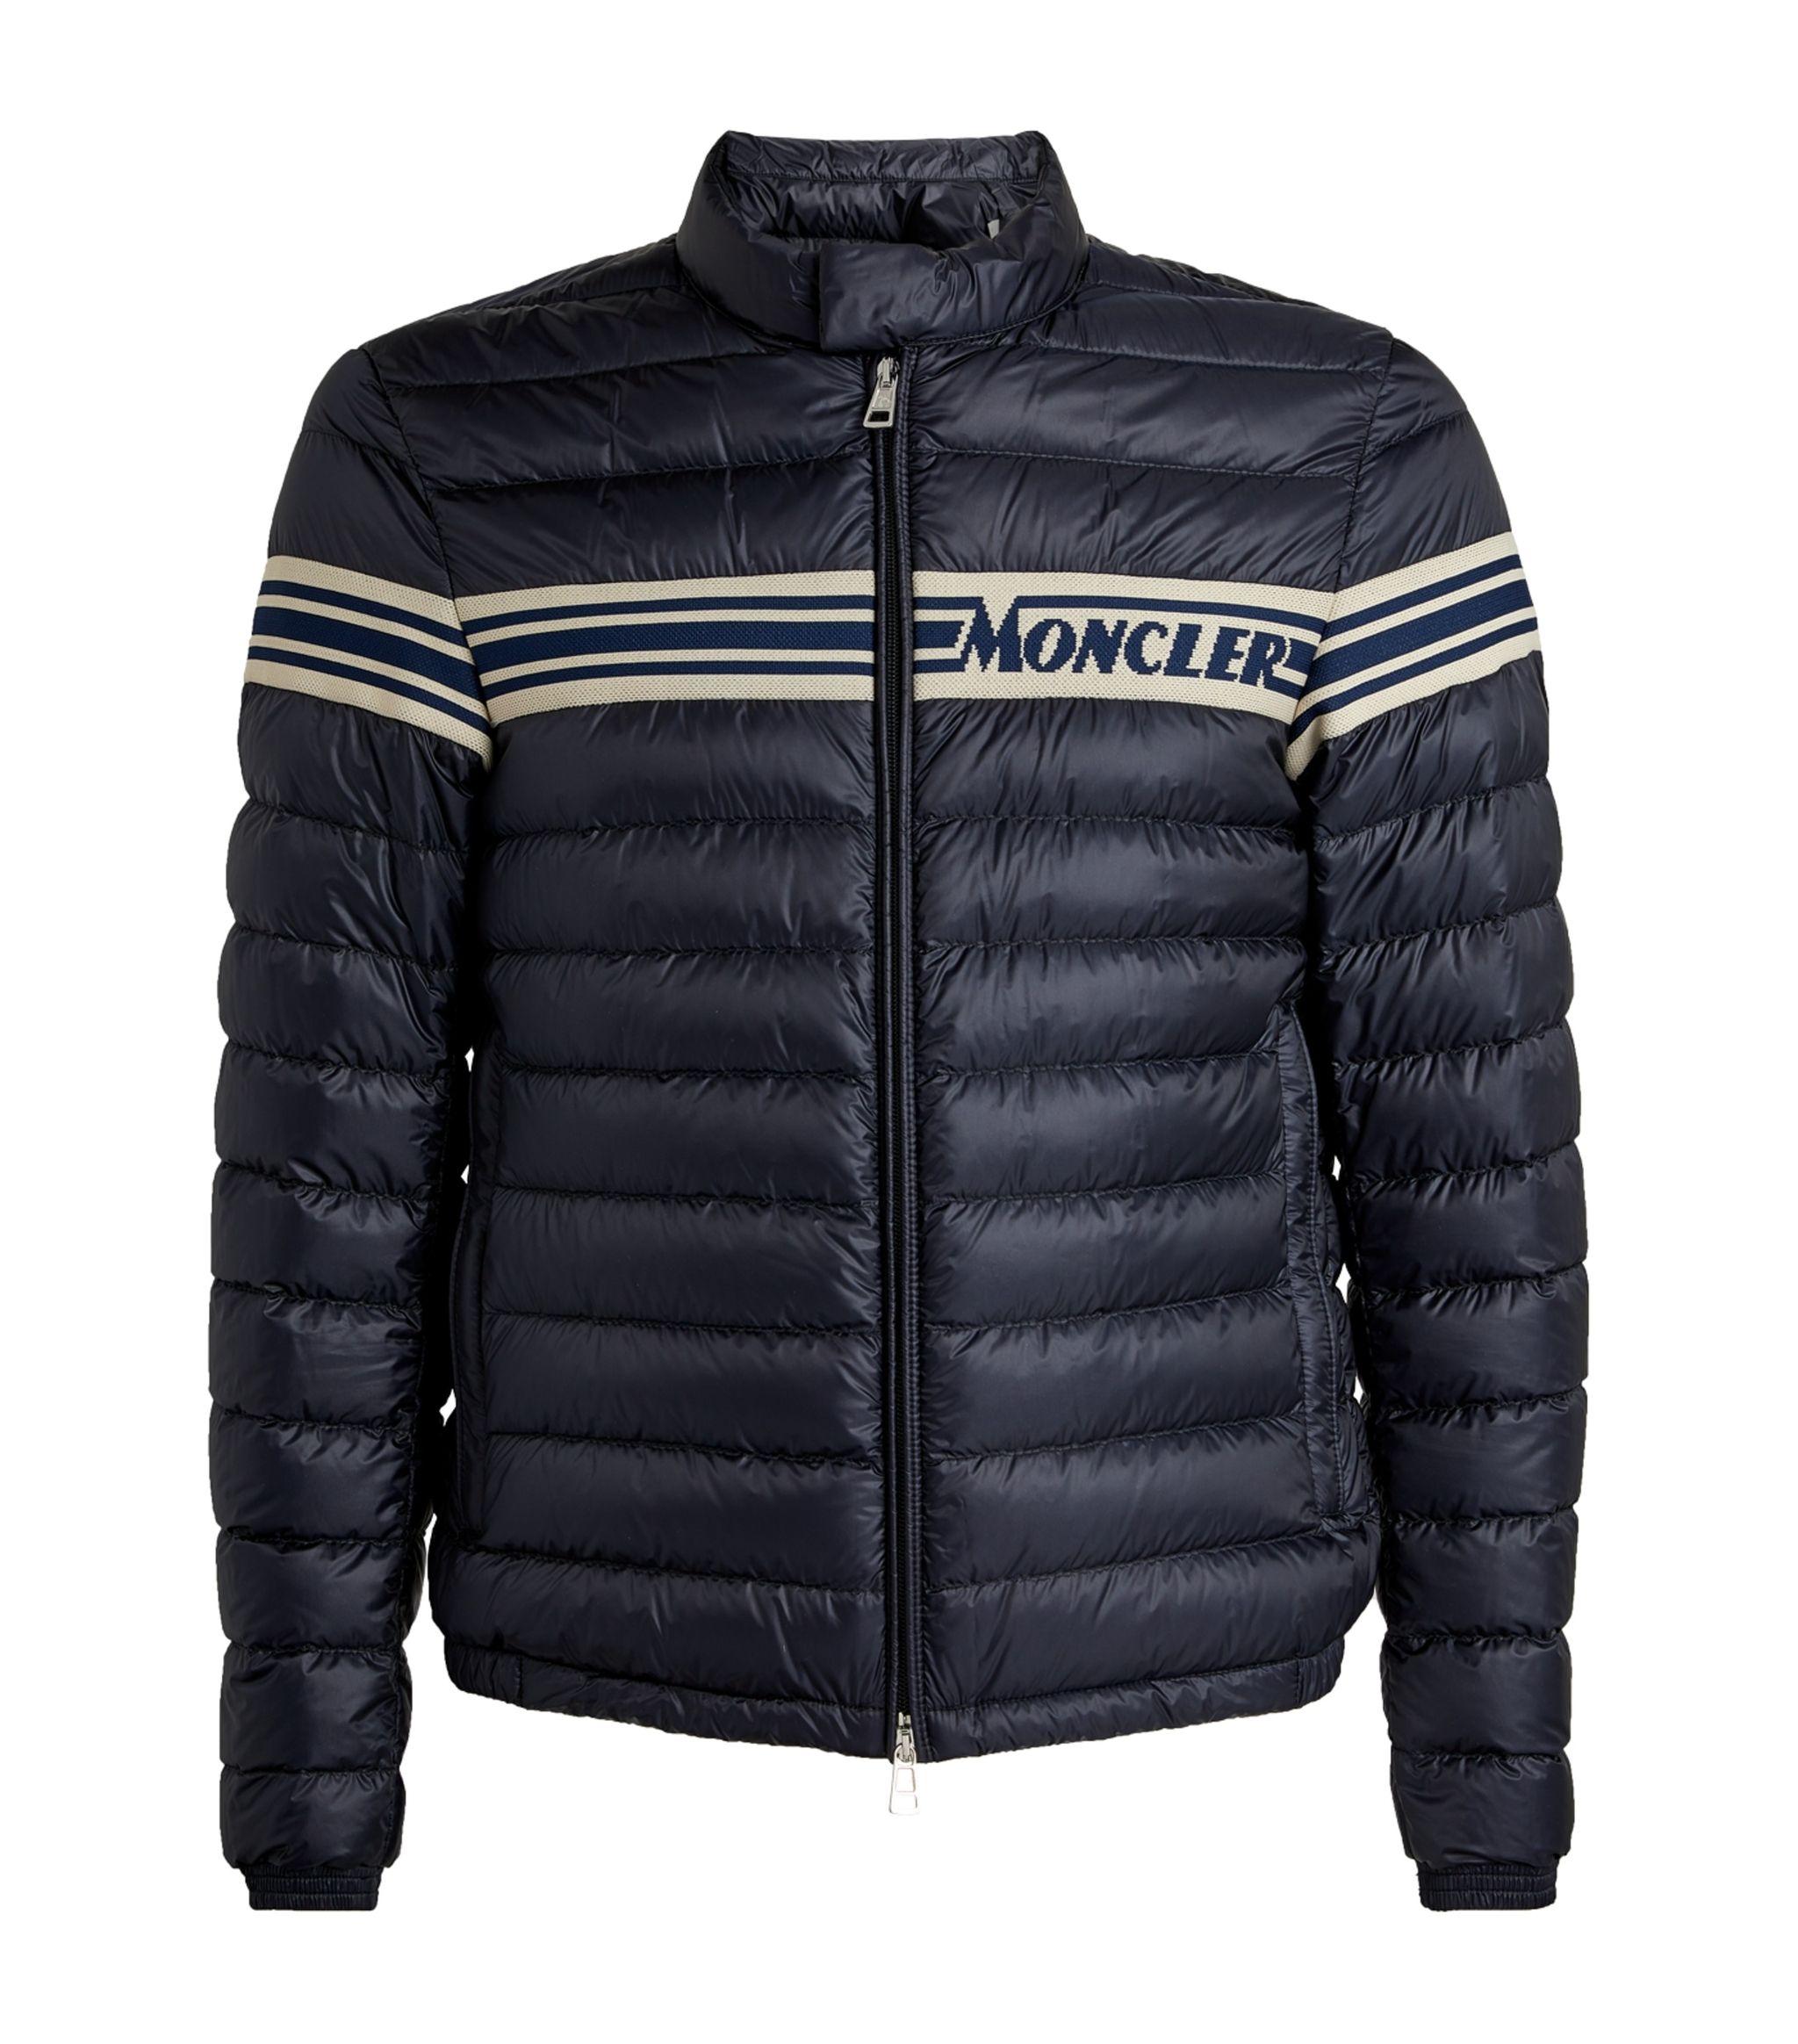 Moncler Synthetic Dark Blue Renald Jacket for Men - Save 84% - Lyst